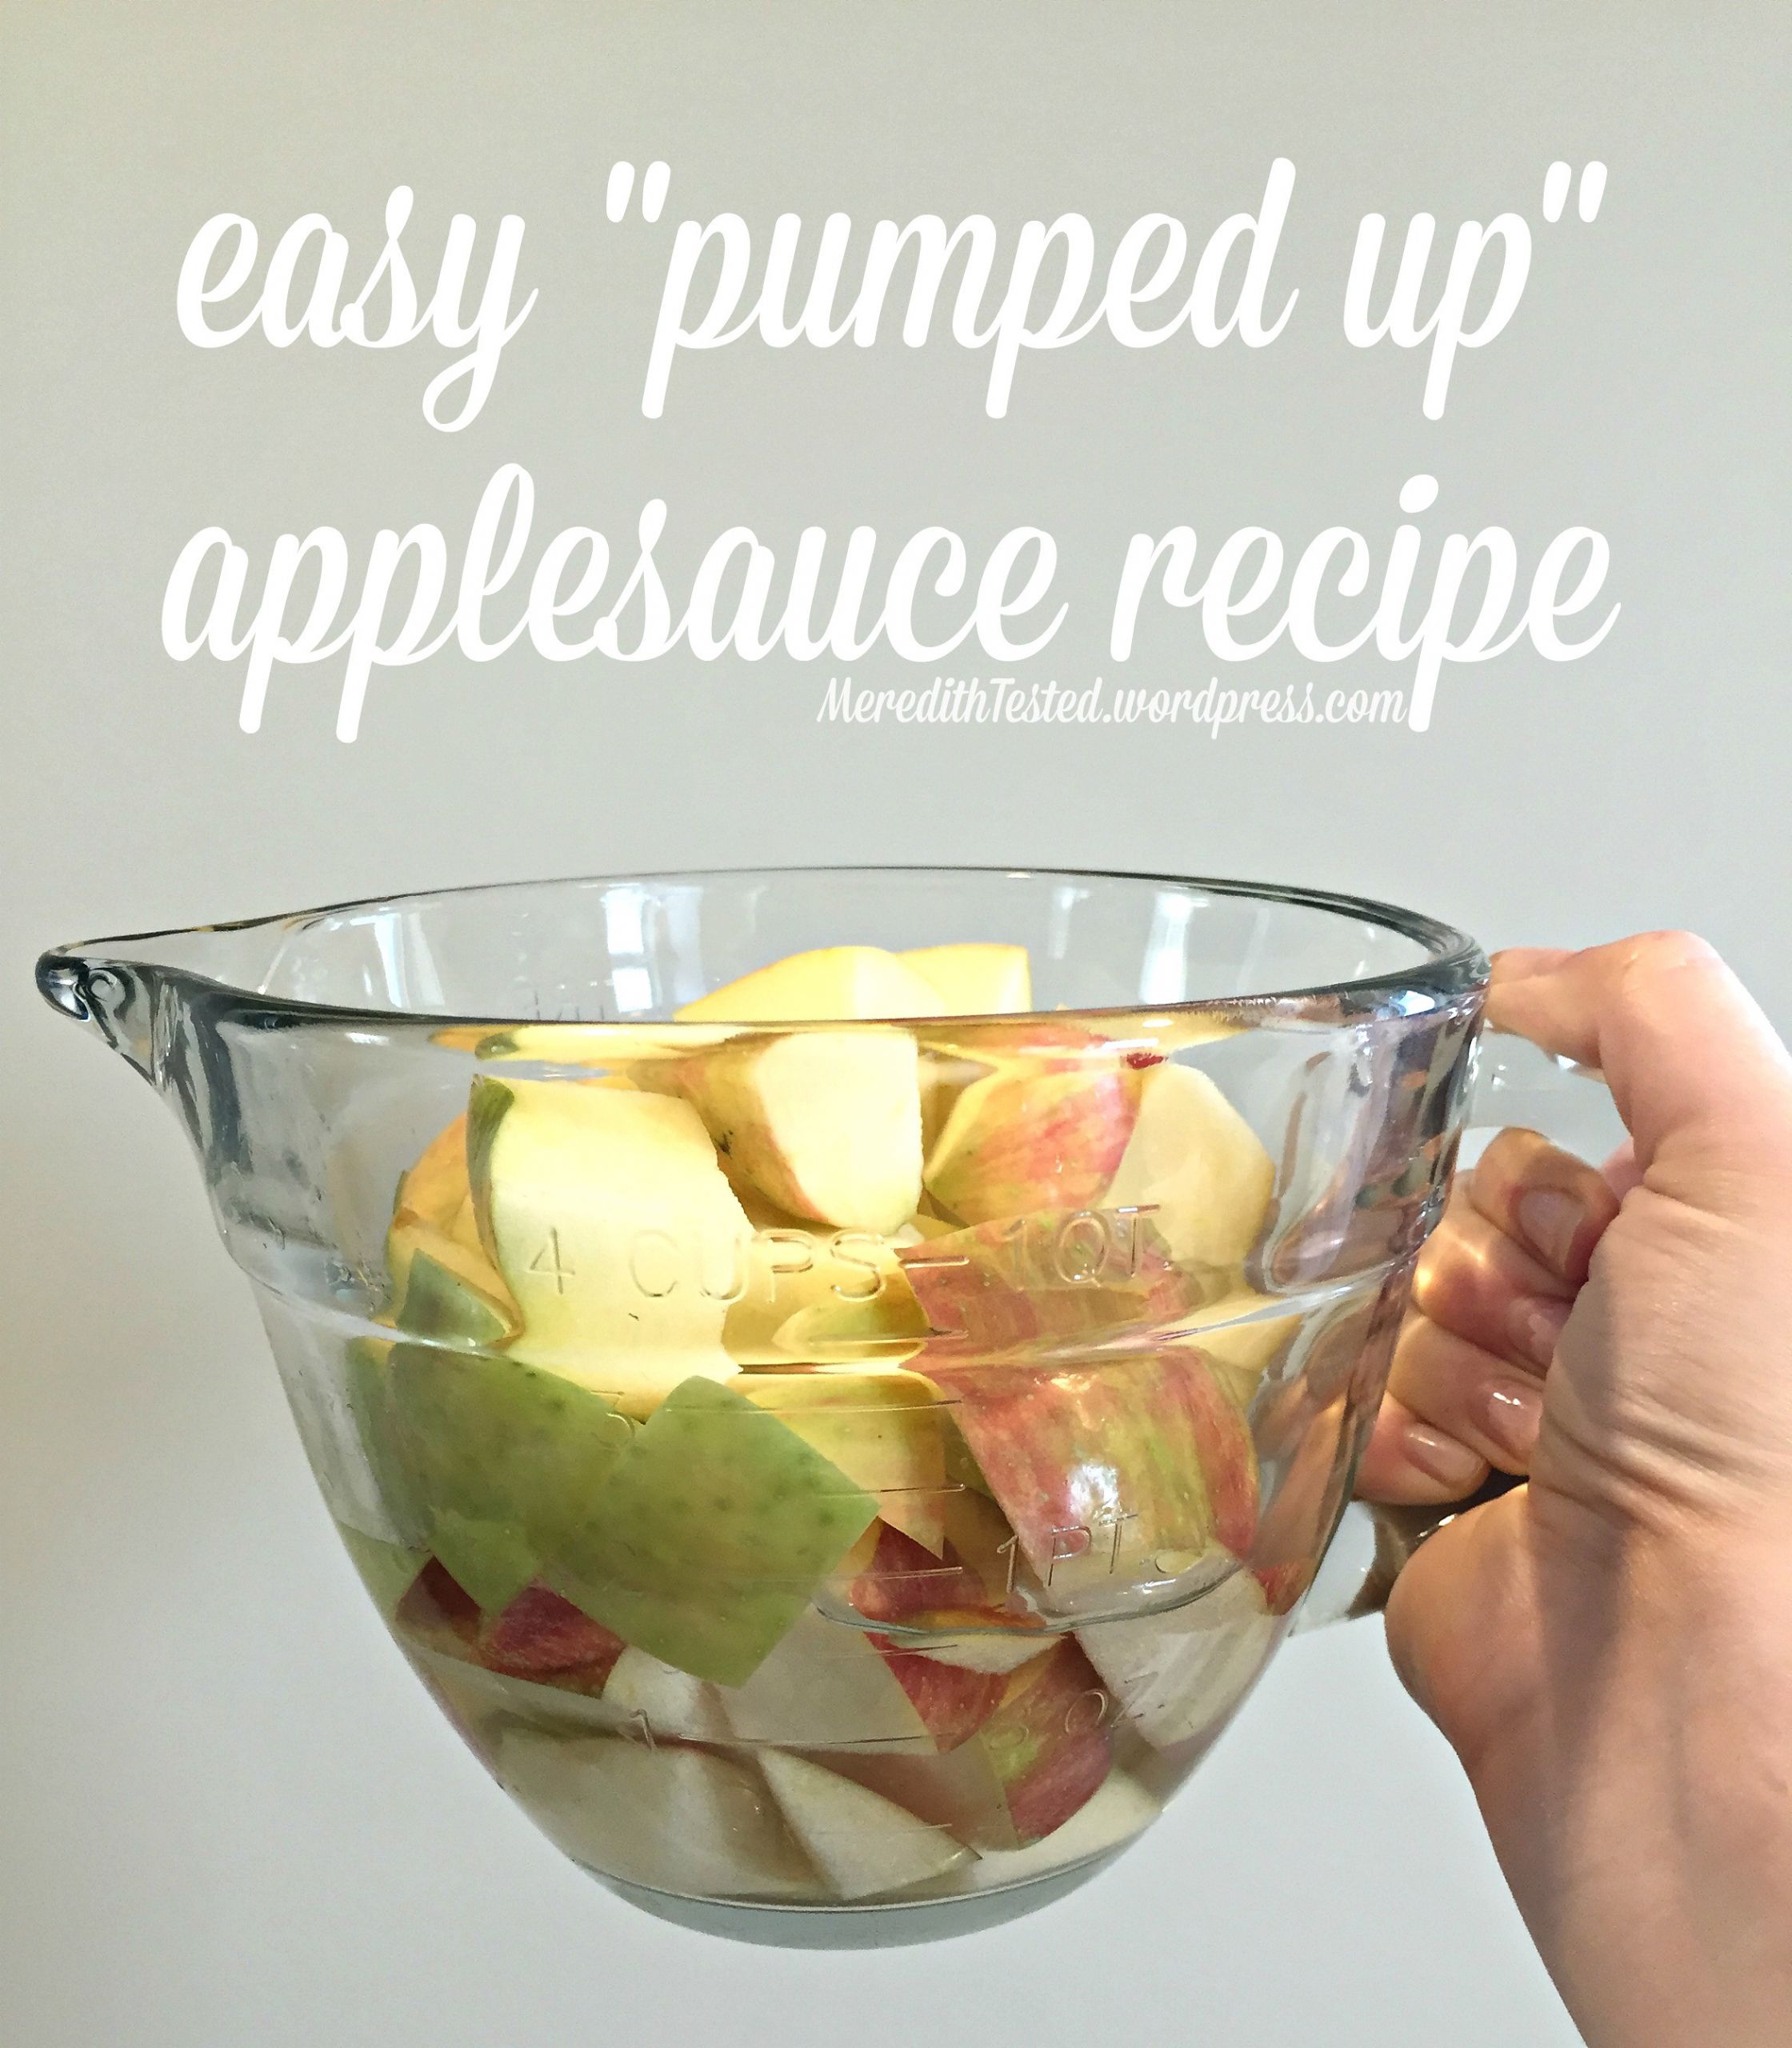 Fiber In Applesauce
 Pumped Up Applesauce Recipe – Meredith Tested